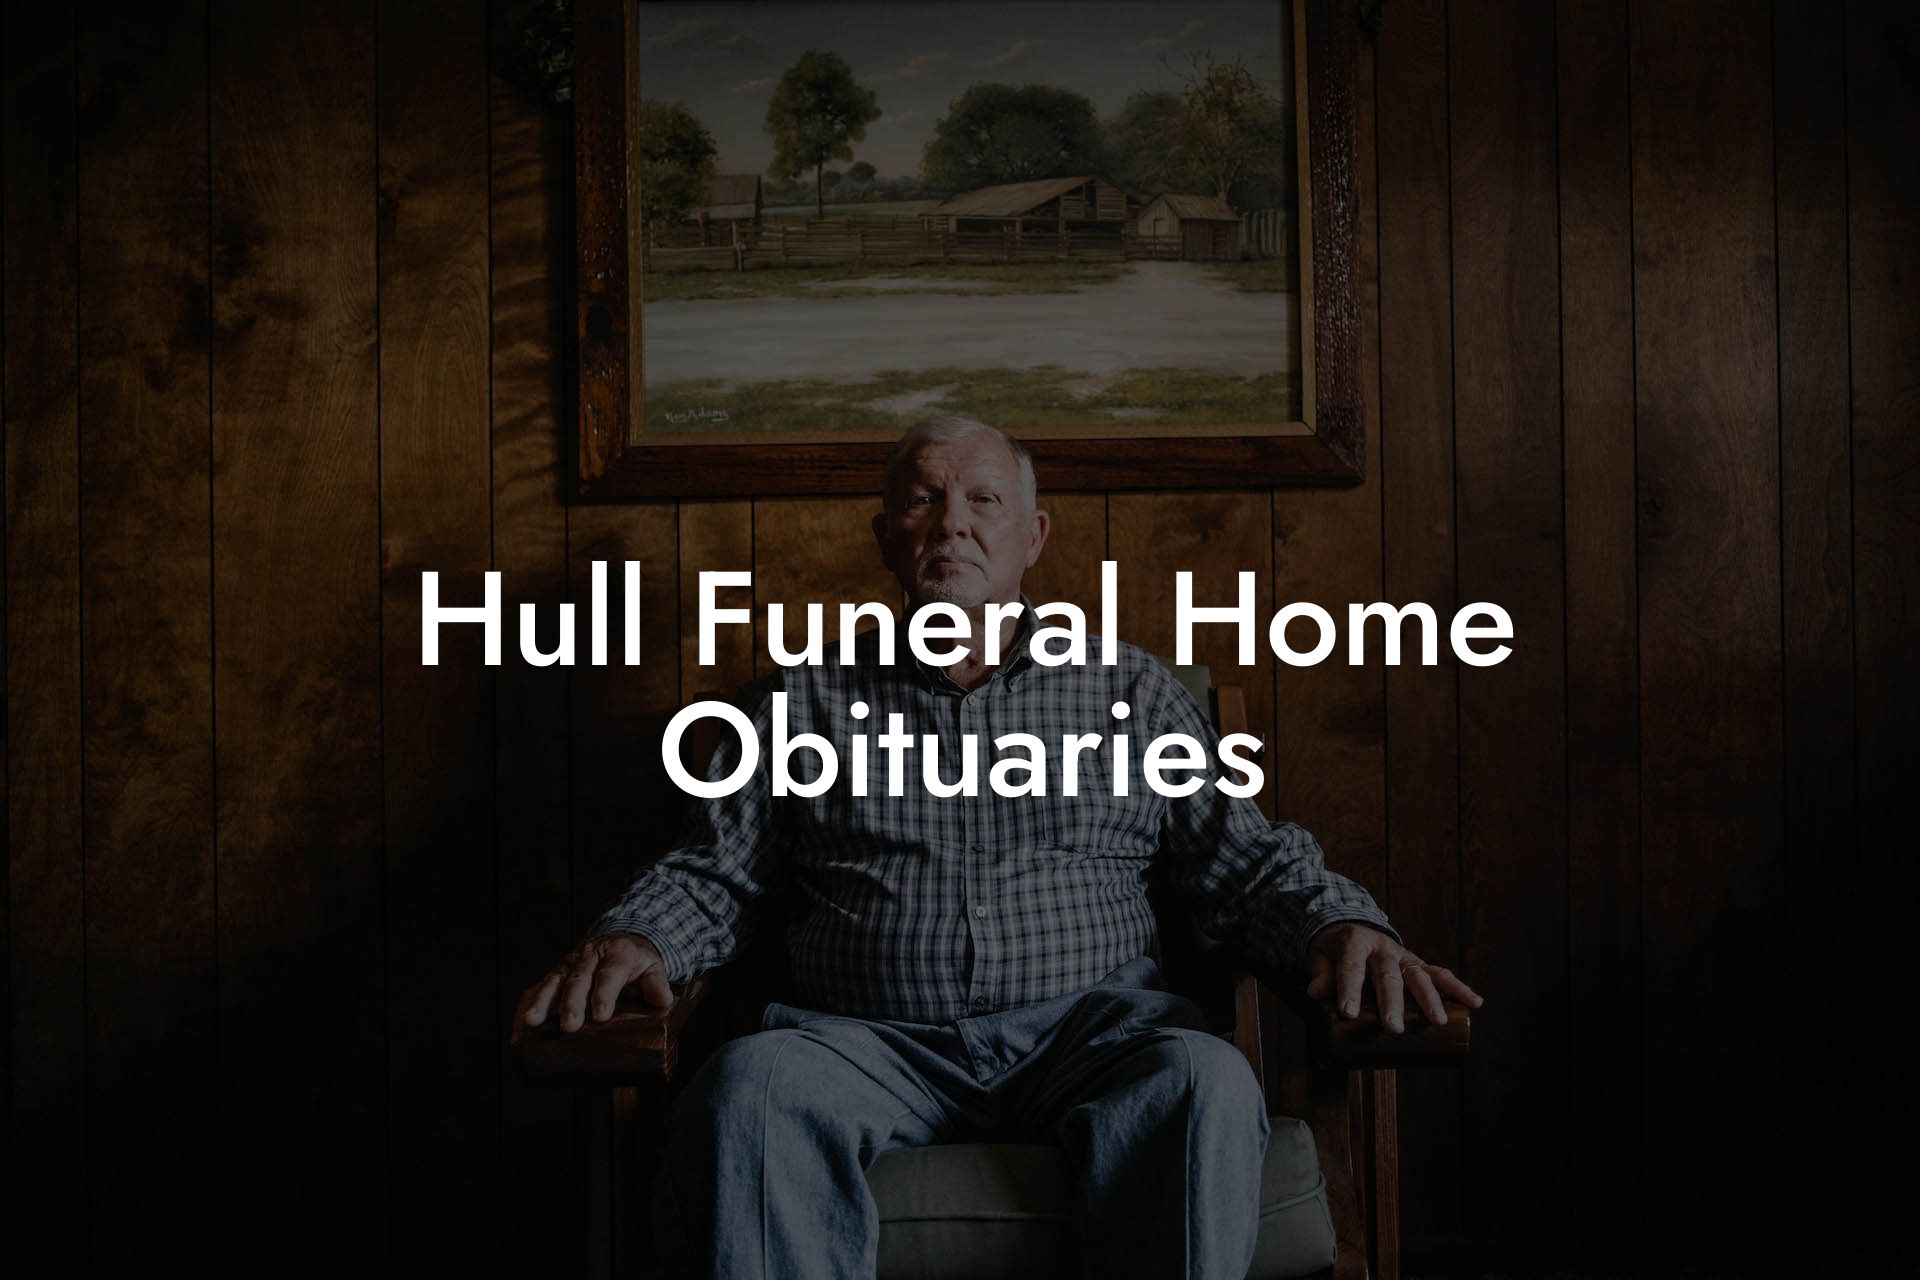 Hull Funeral Home Obituaries